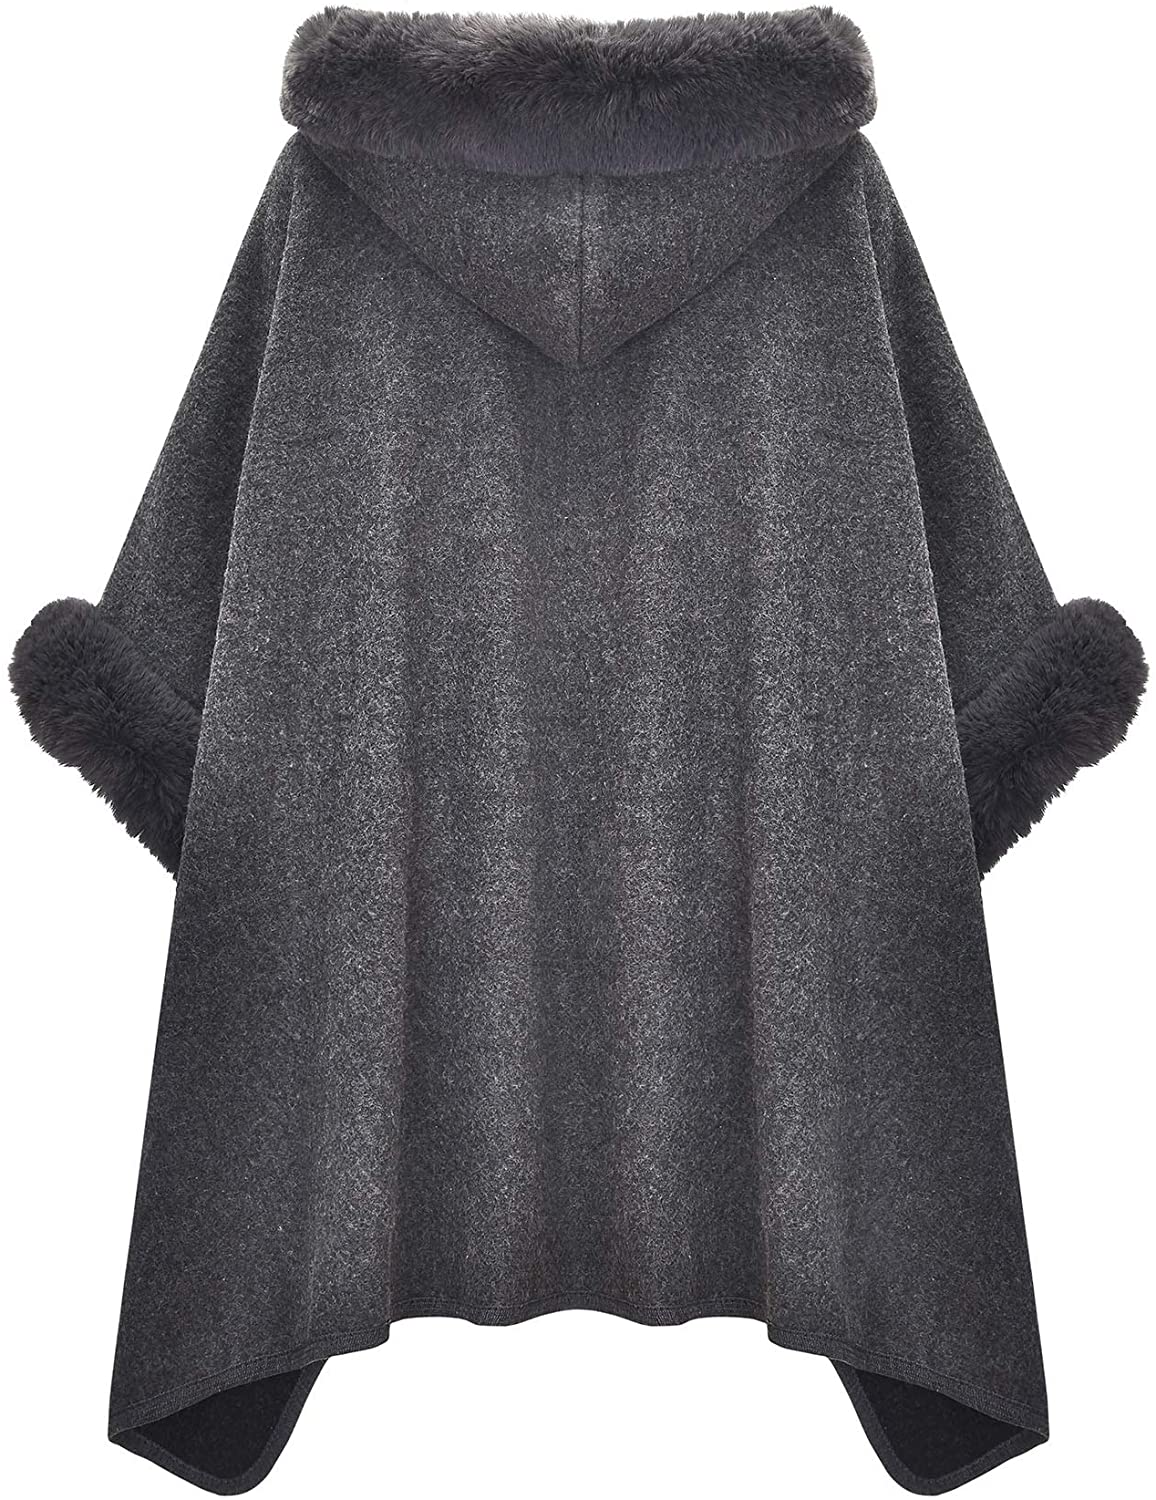 Women Winter Fashion Faux Fur Trim Layers Hooded Cardigan Warm Cape